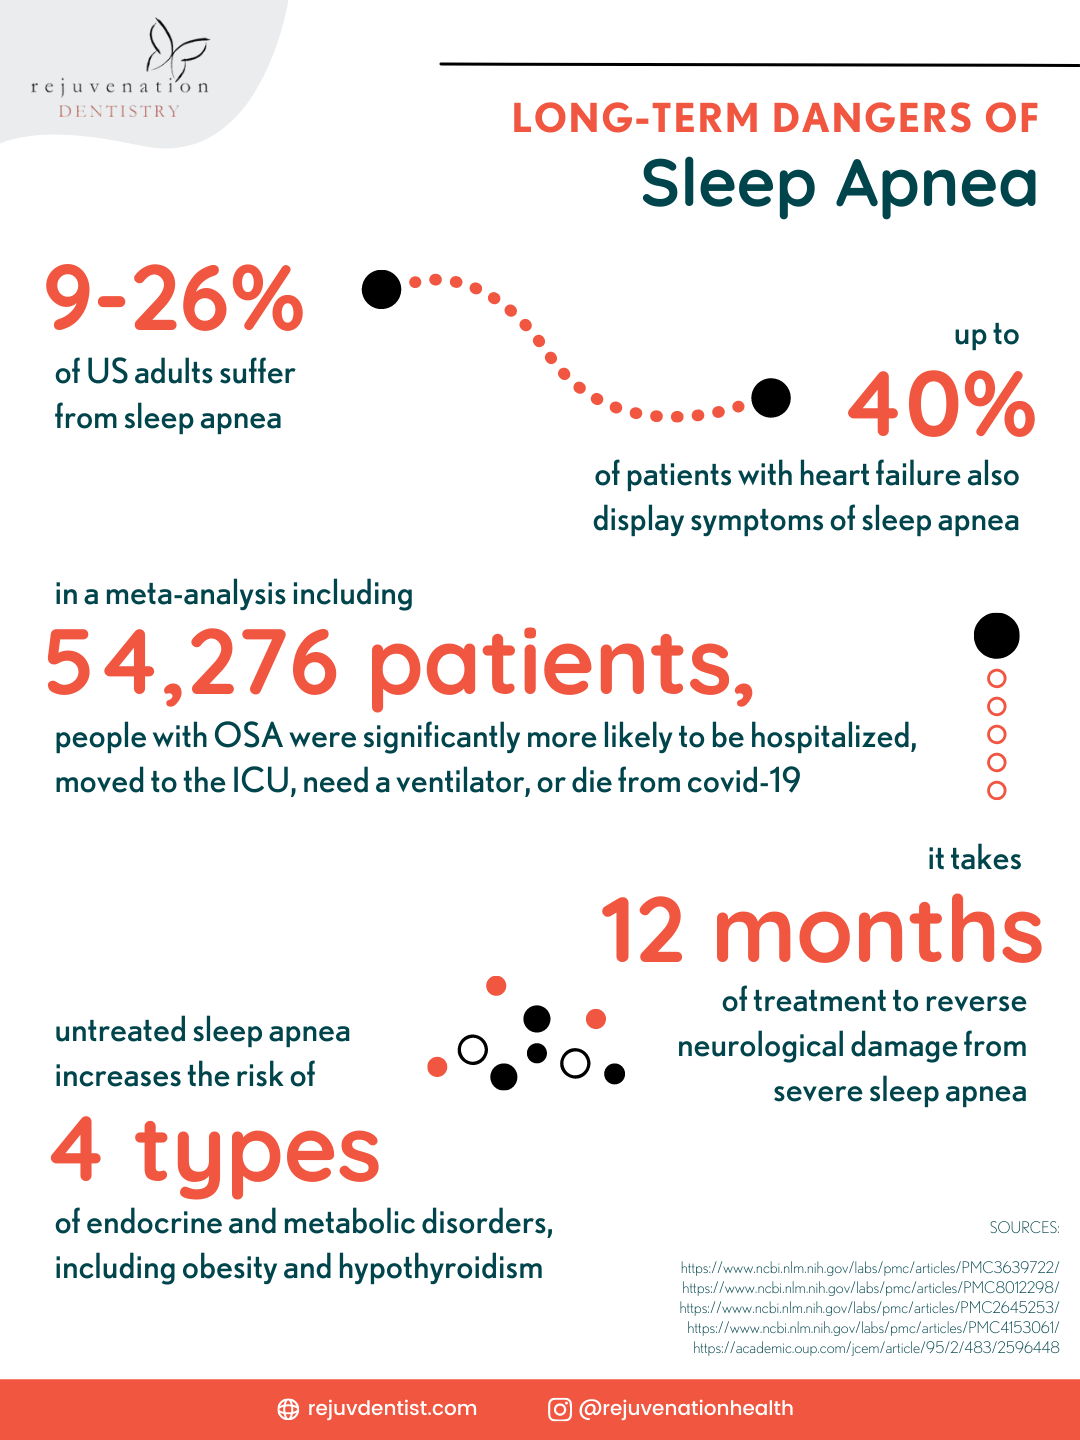 osa side effects, long-term health effects of osa, covid-19 sleep apnea